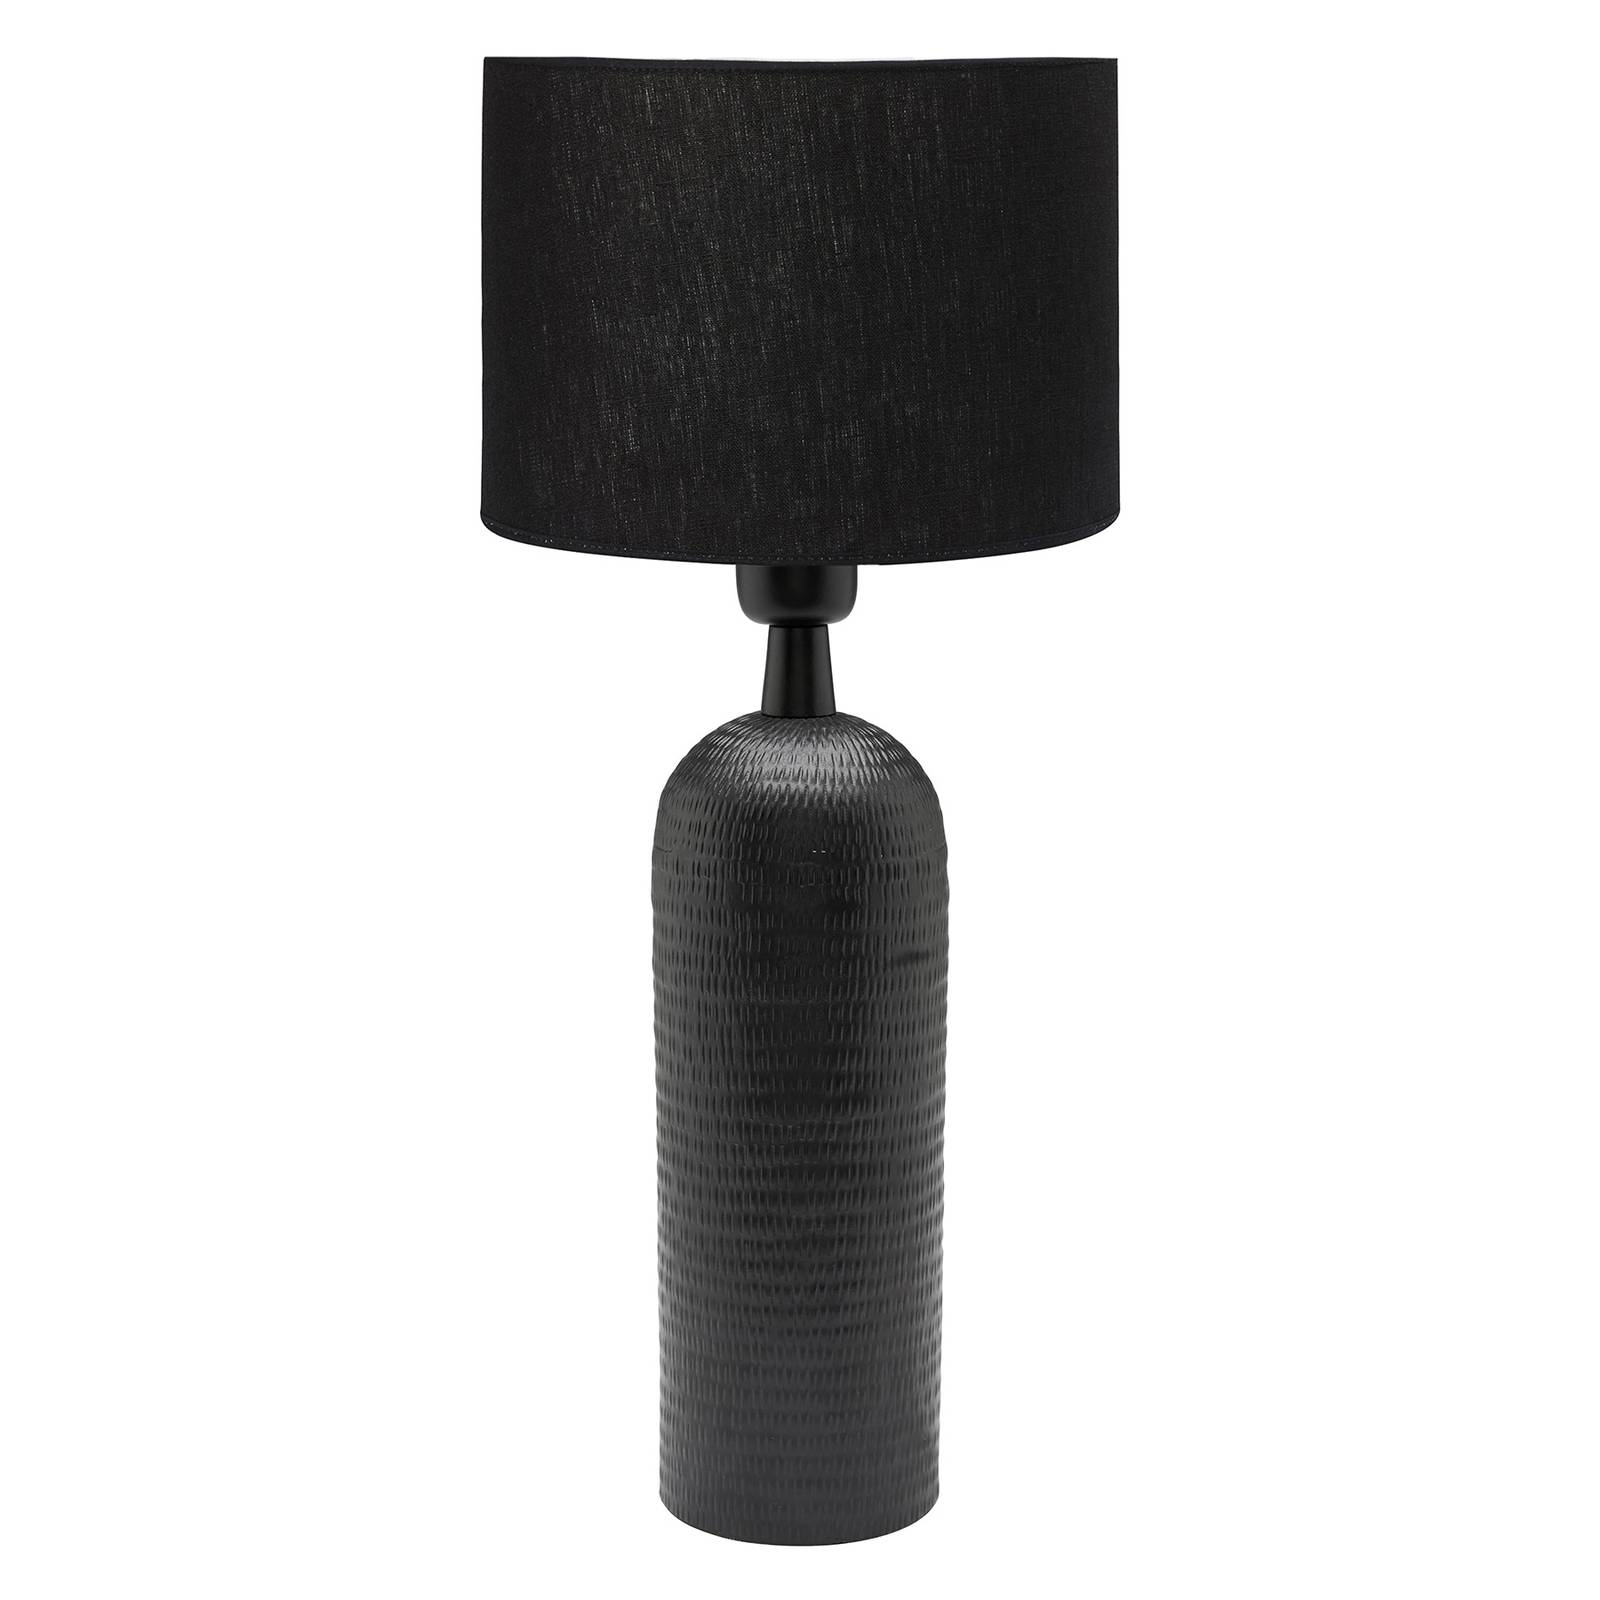 PR Home Riley bordlampe i sort, højde 54 cm